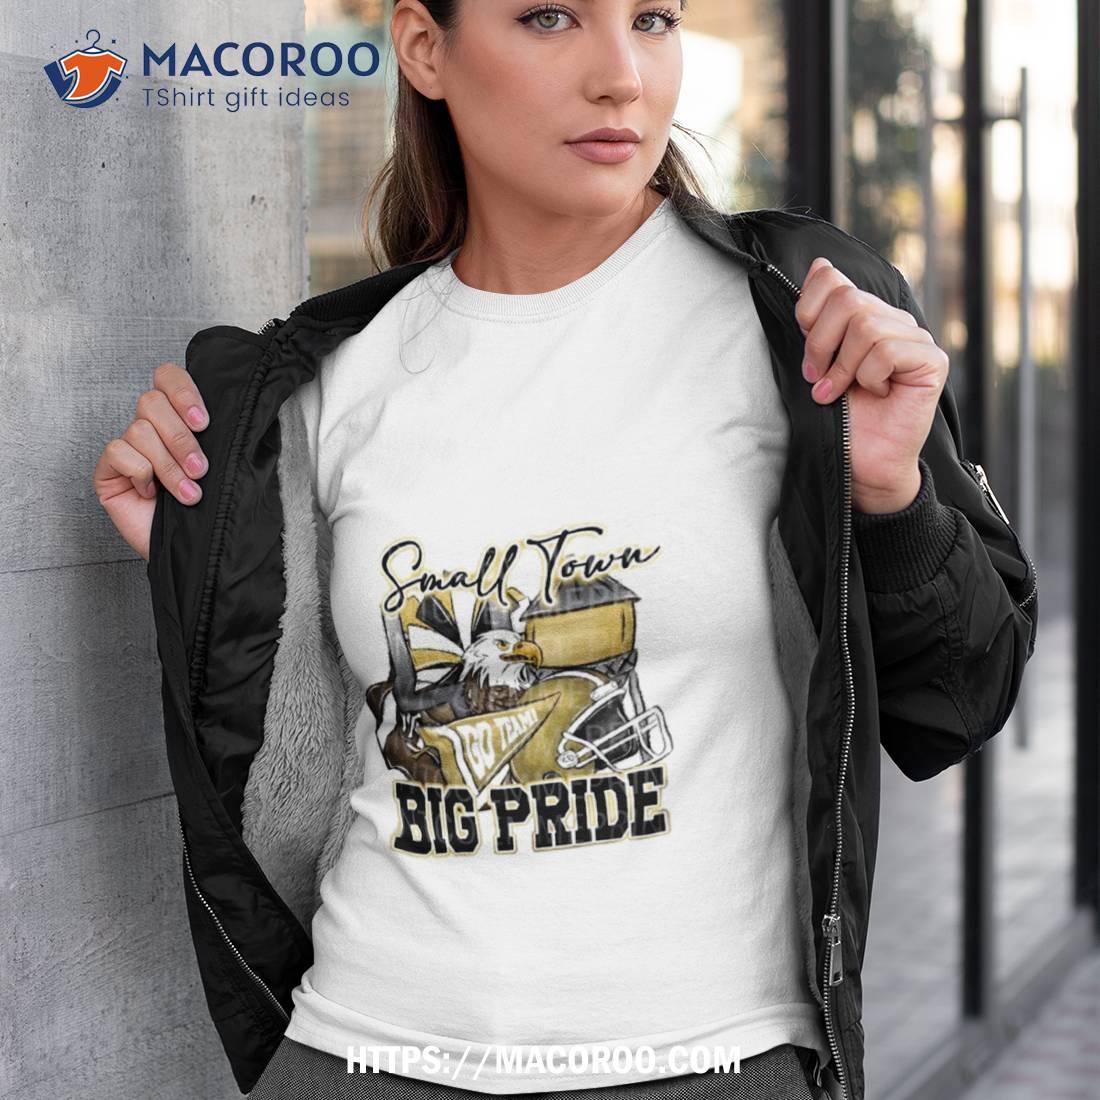 Small Town Go Team Big Pride Eagles Football Sublimation Design Shirt